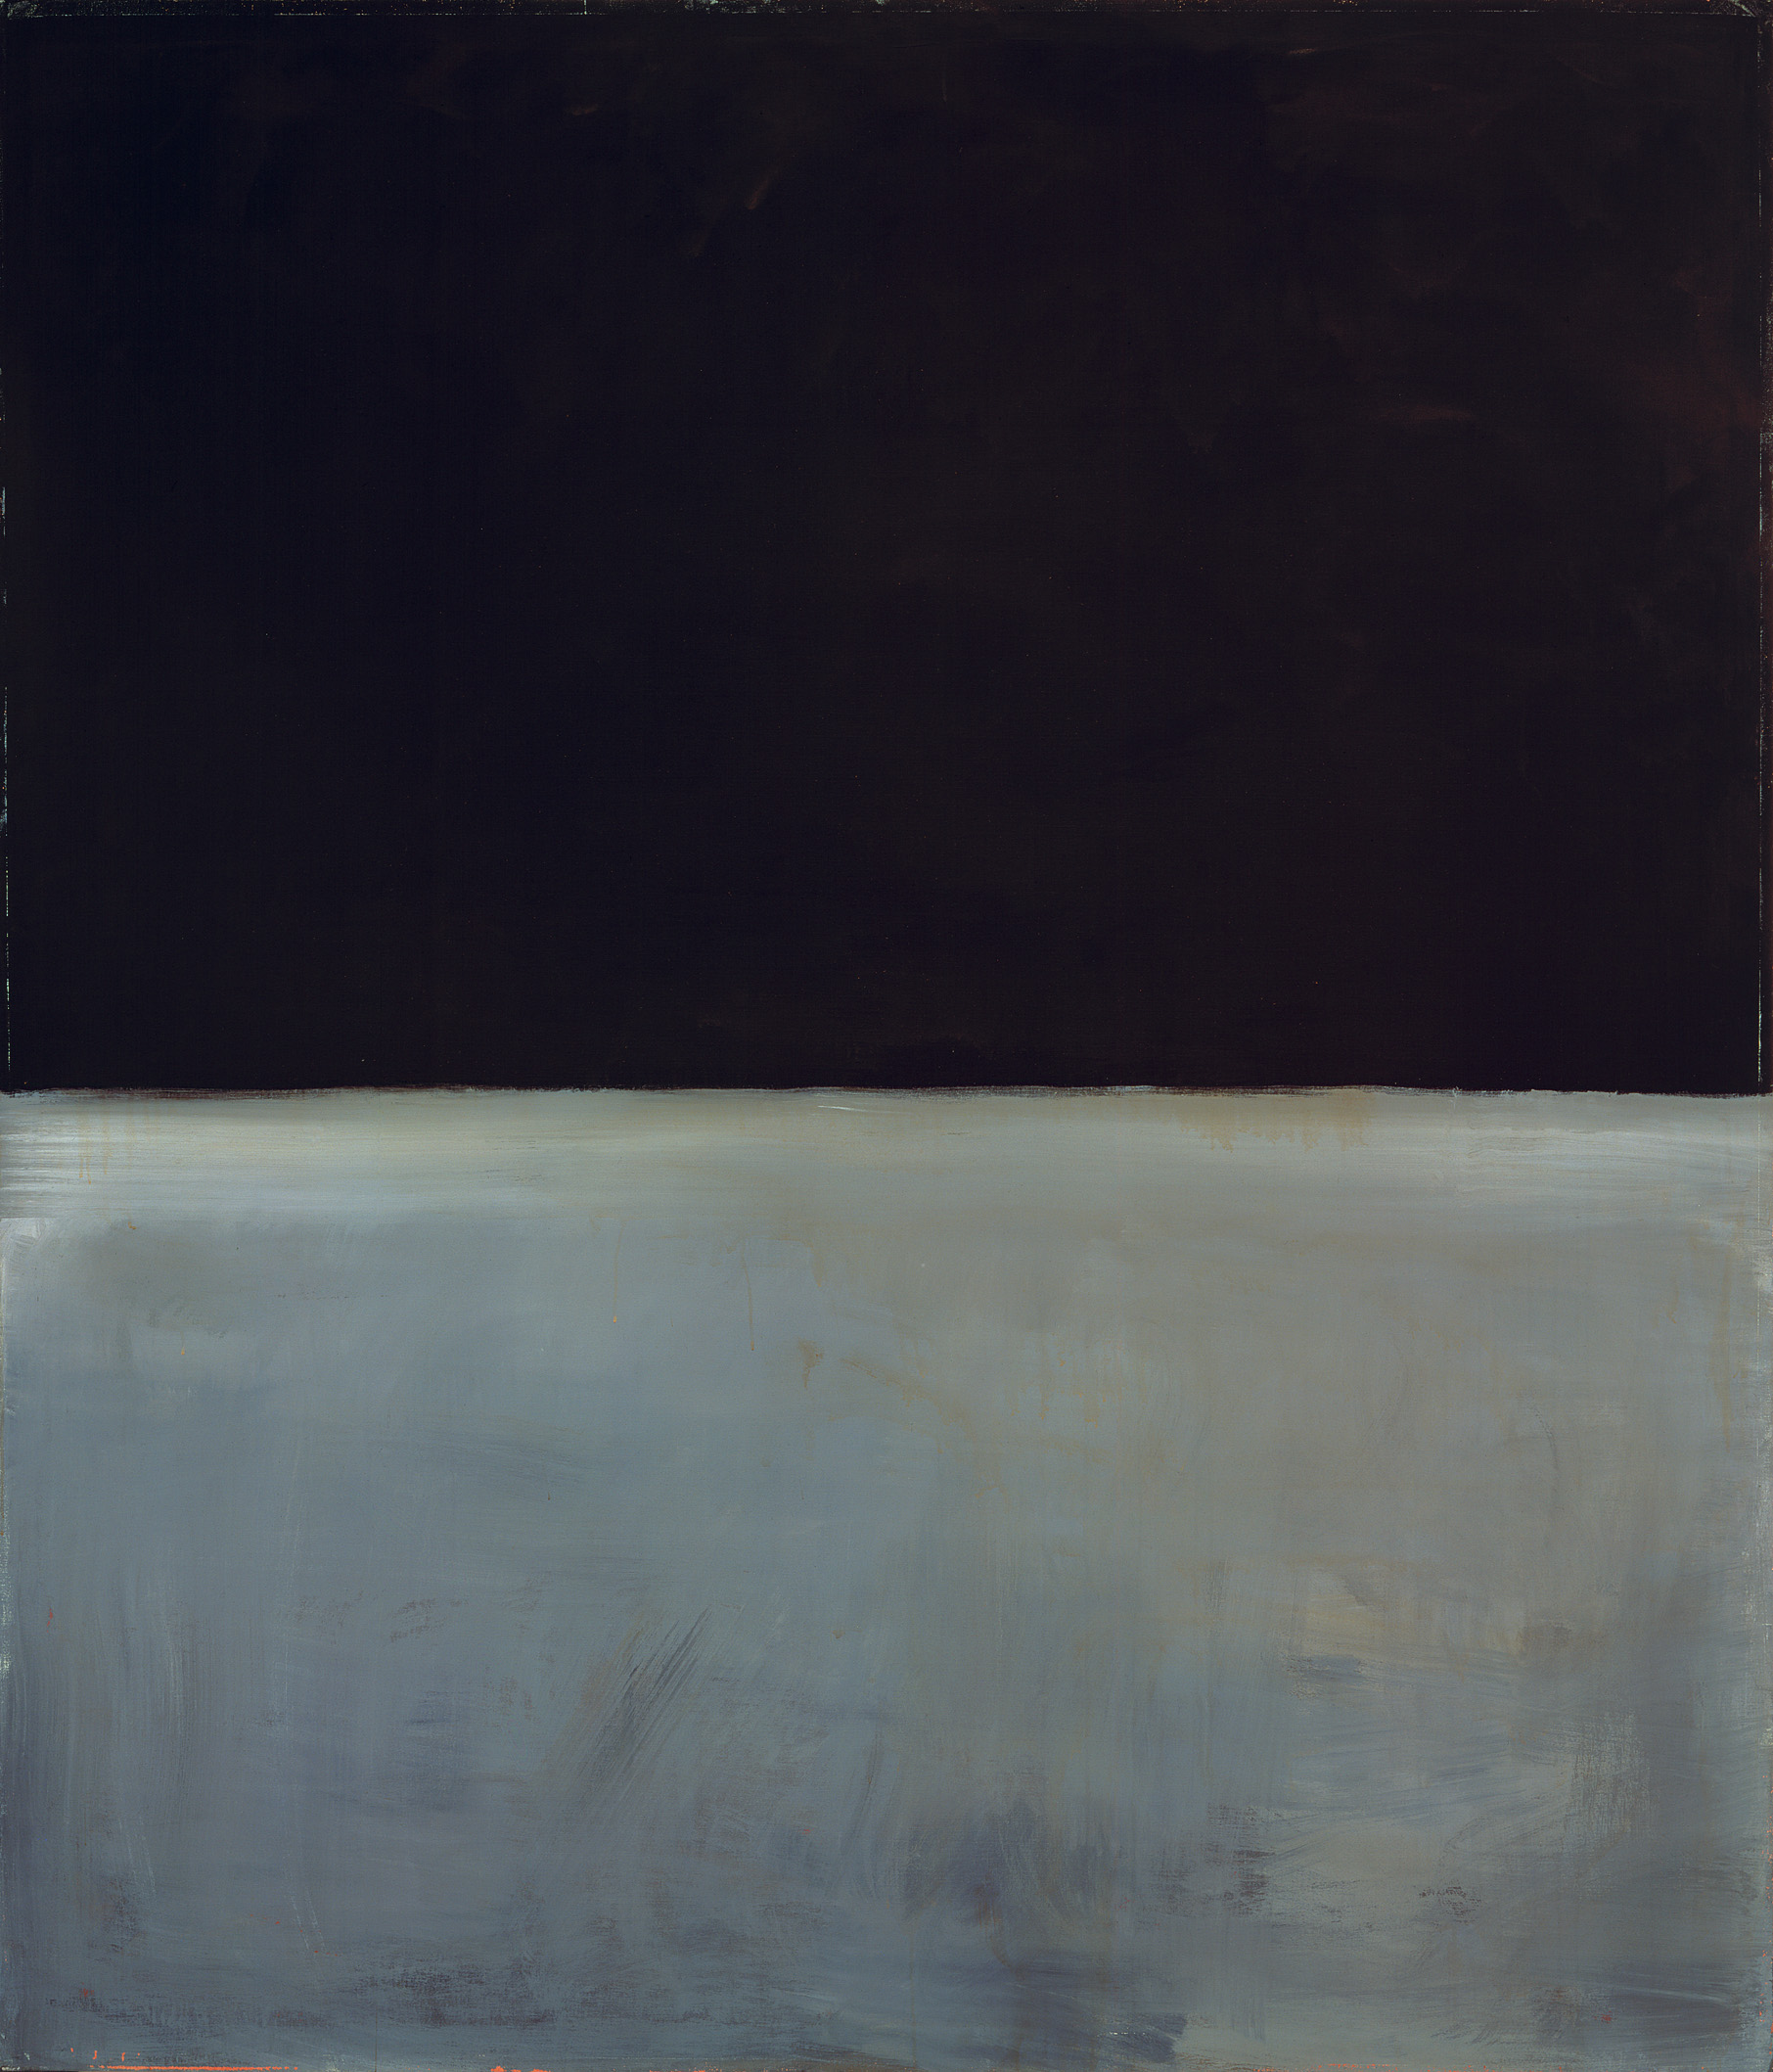 مِن غَير عنوان by Mark Rothko - ١٩٦٩ - ٢٣٣.٧ × ٢٠٠.٣ 